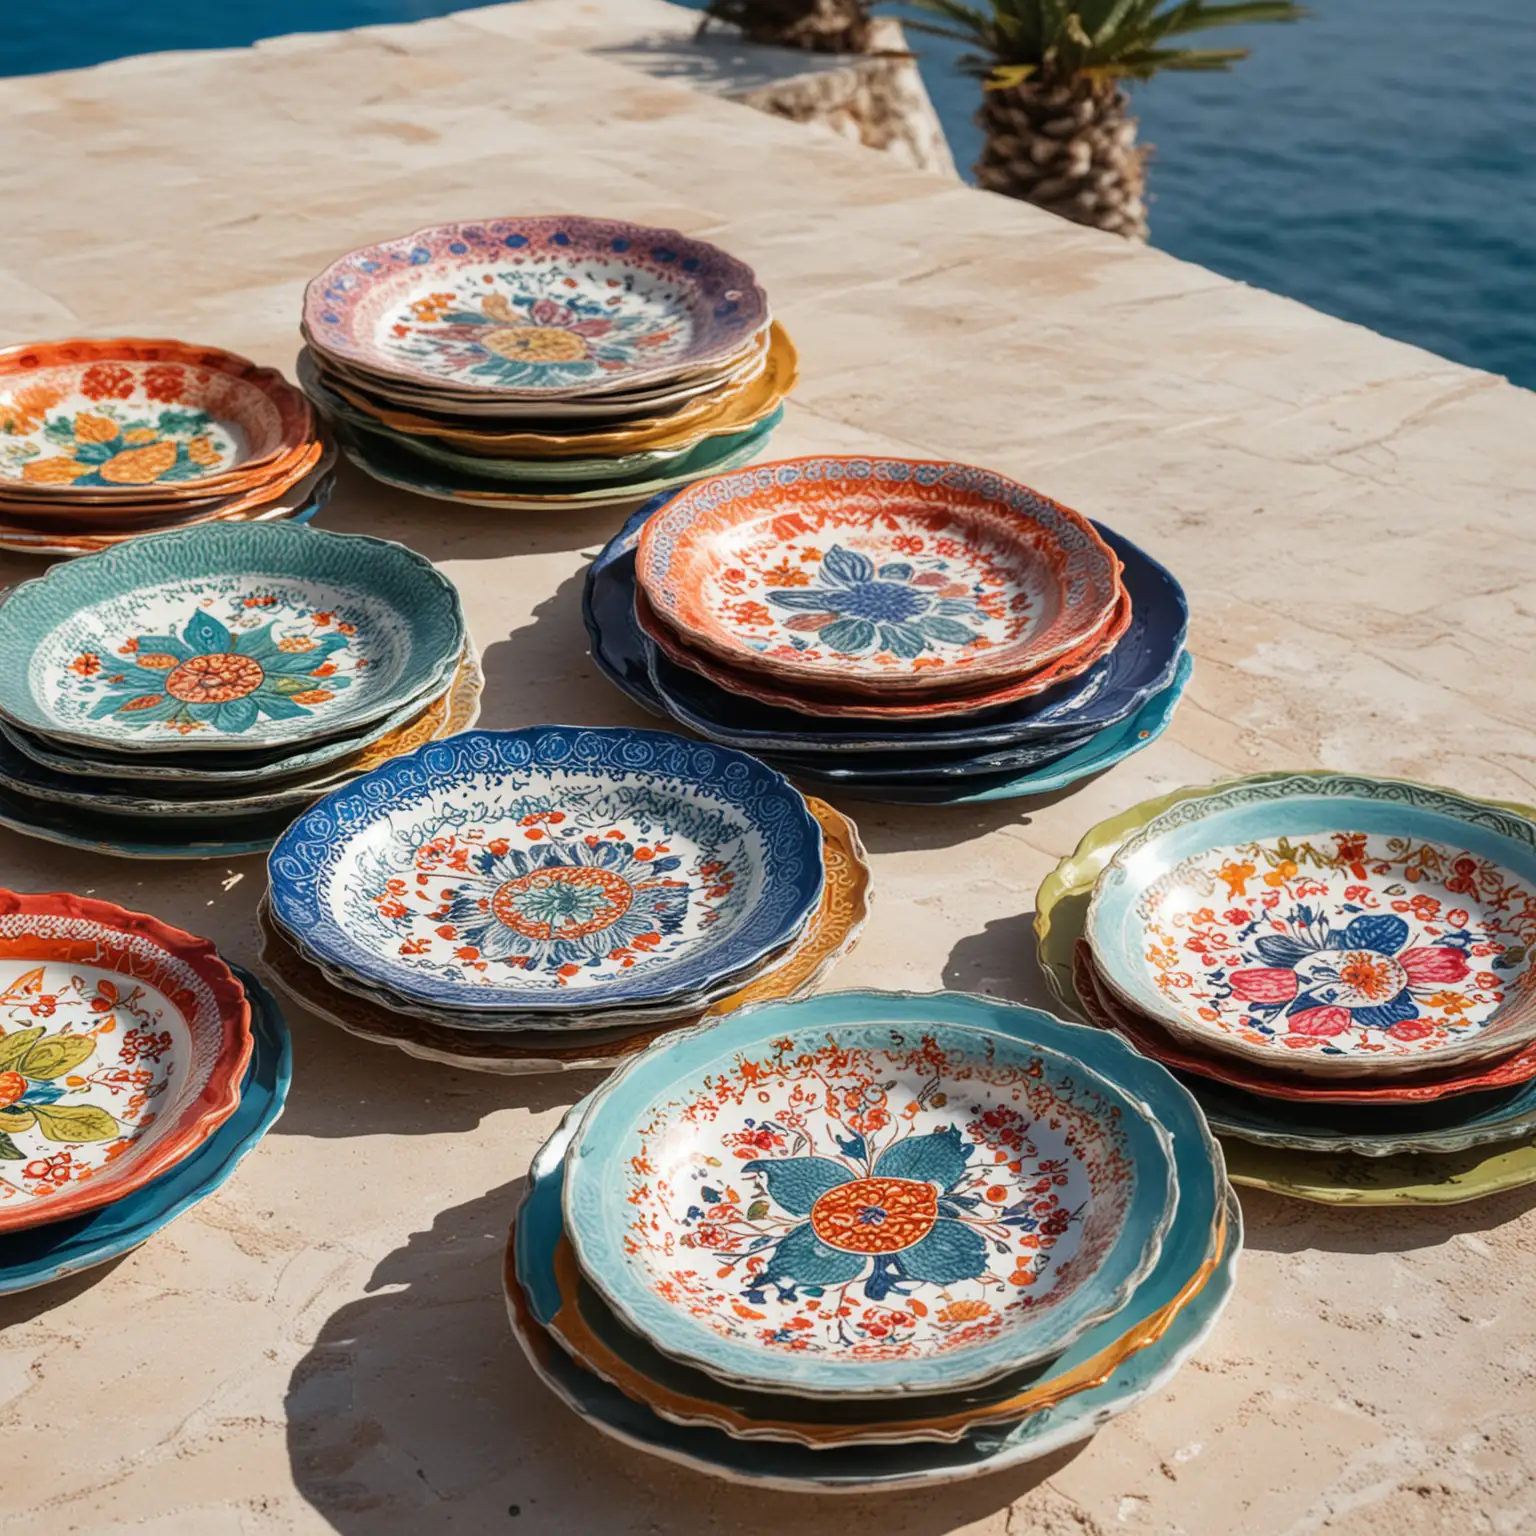 Luxury-Villa-Mediterranean-Sea-Close-Up-of-6-Colorful-Plates